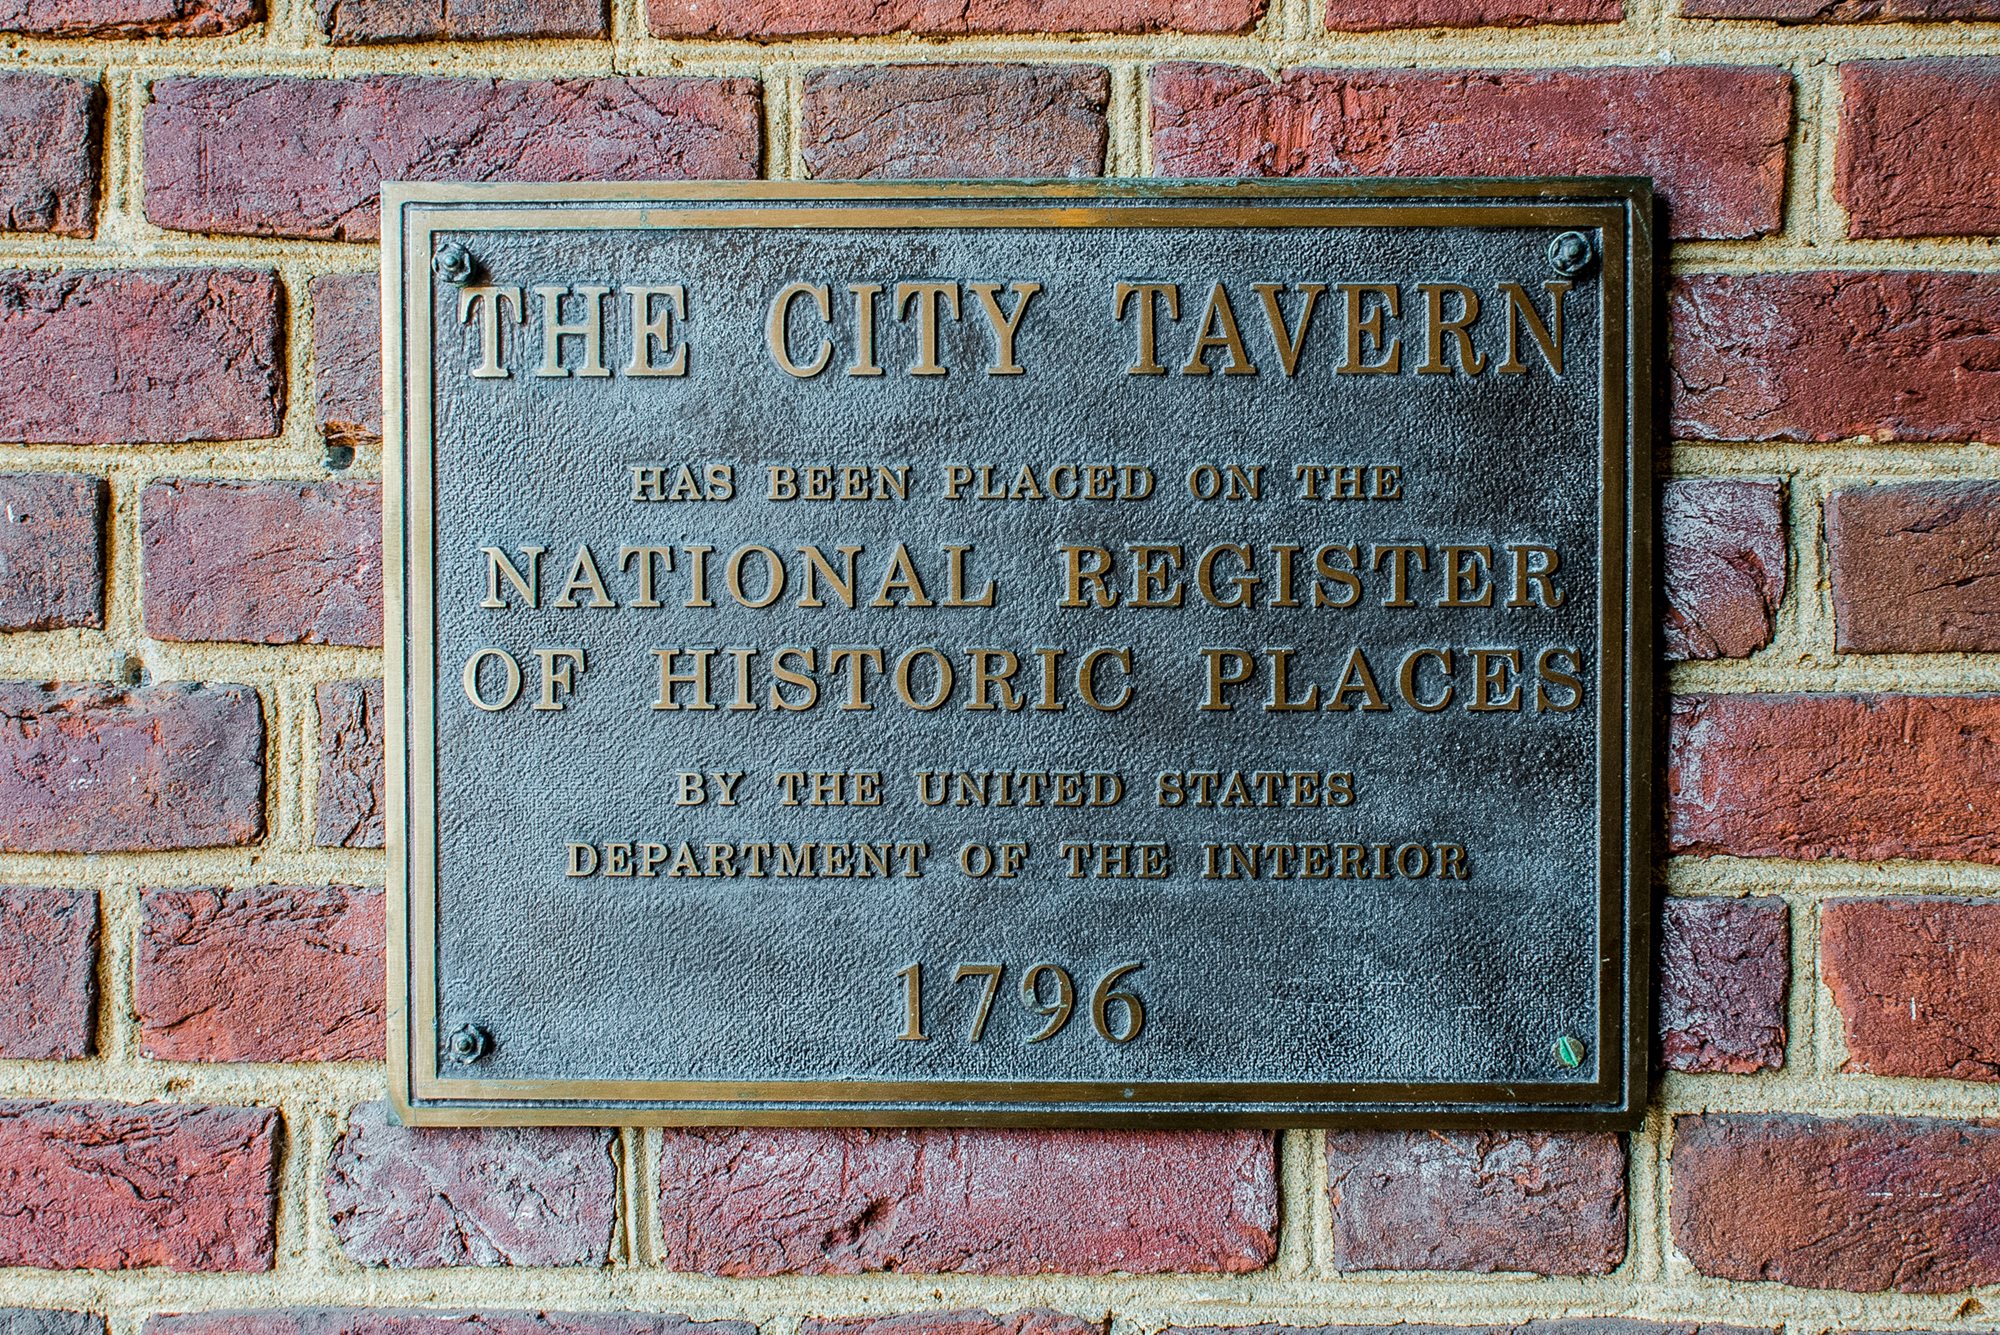  The historical marker plaque,   via   